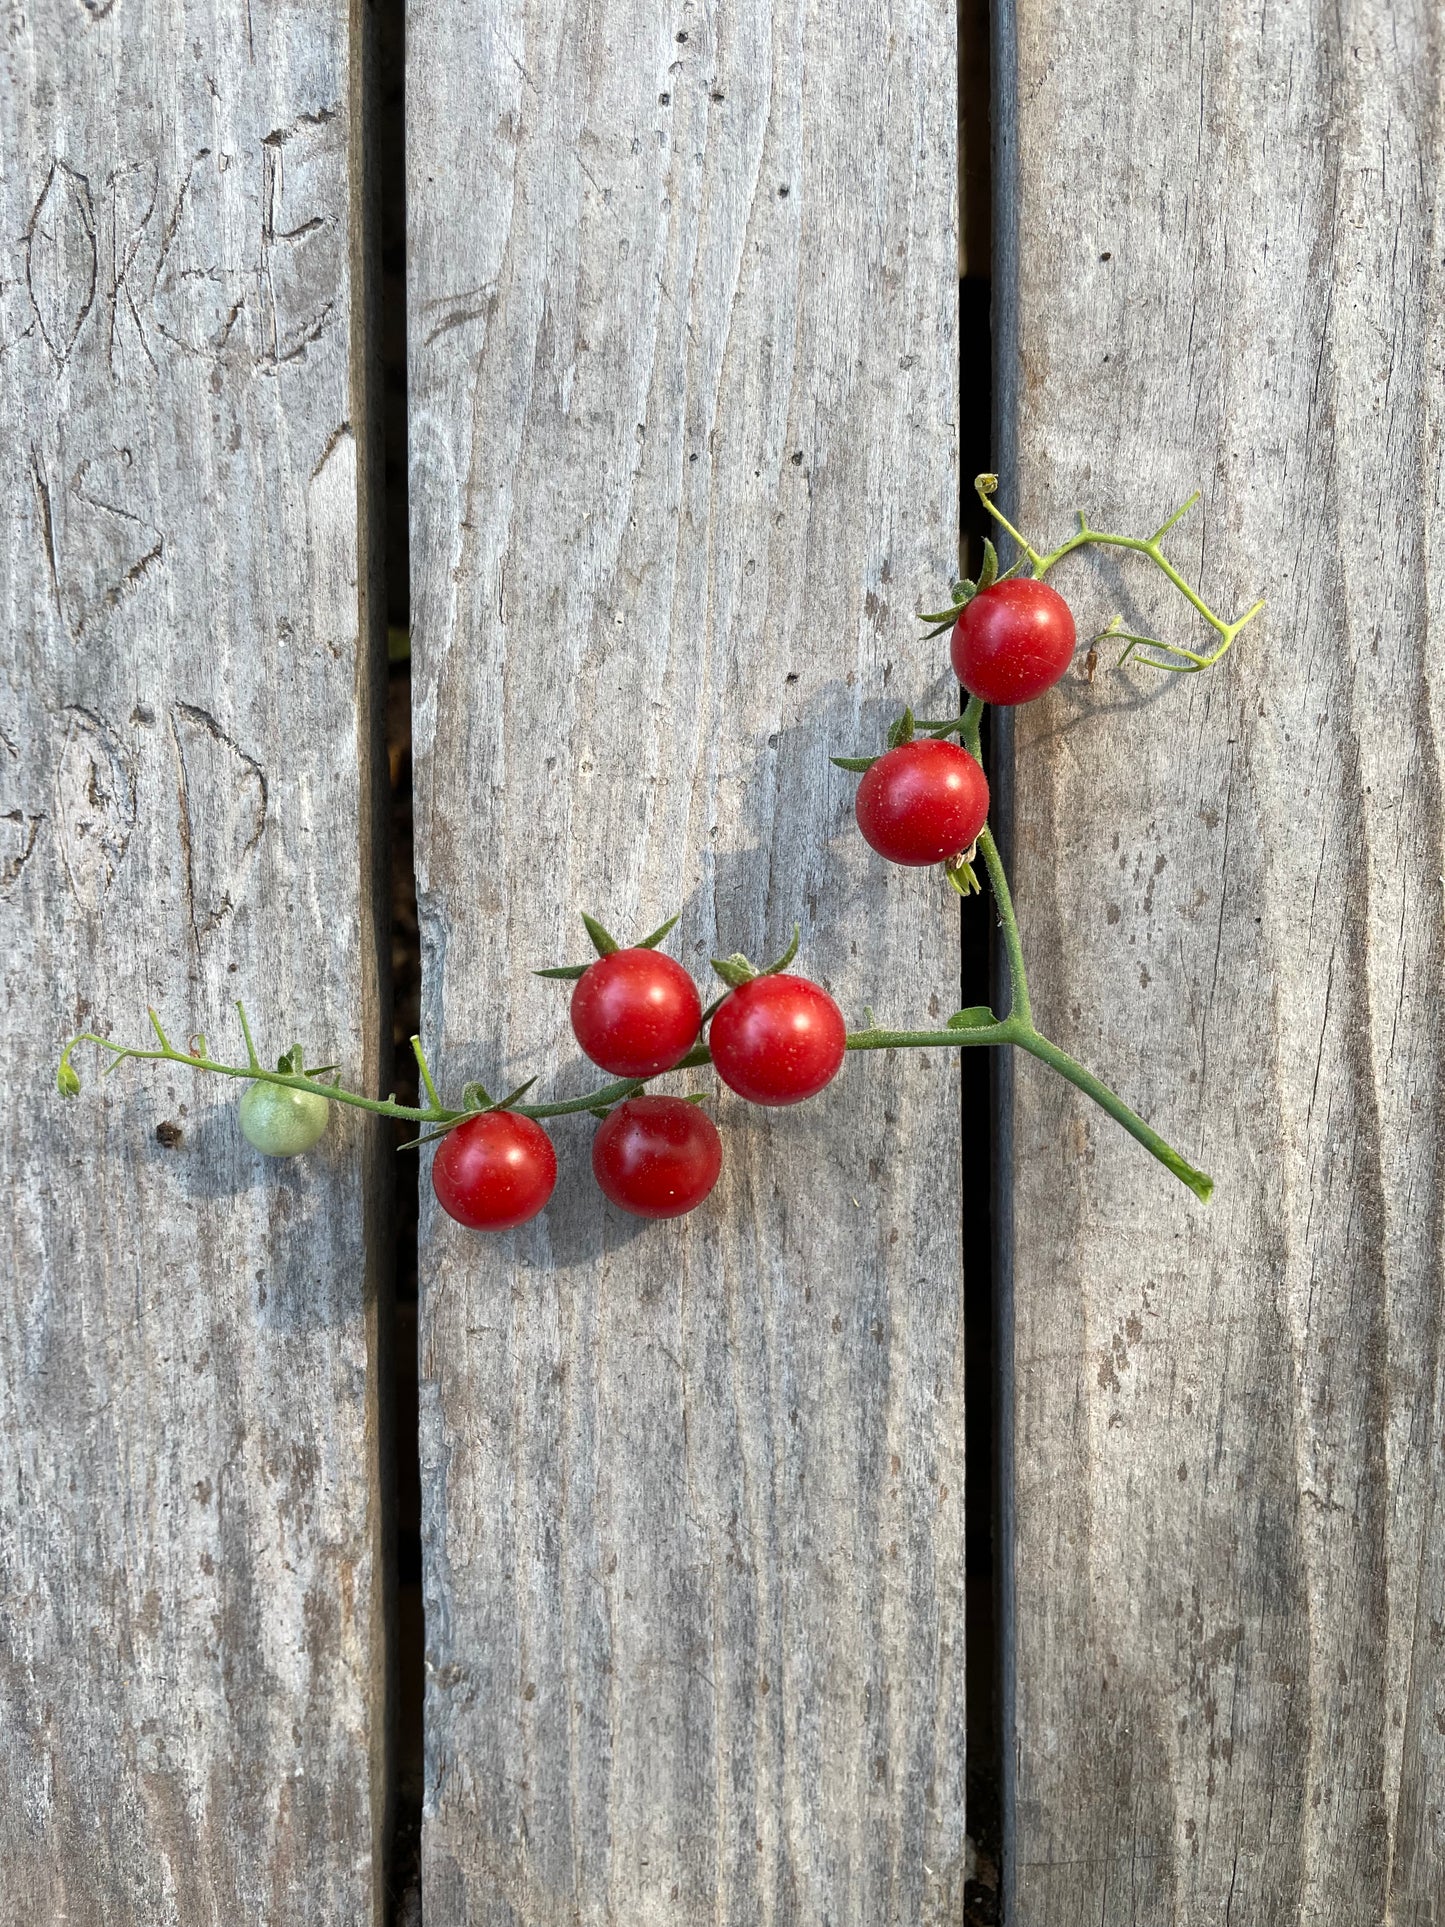 Matt’s Wild Cherry heirloom tomato